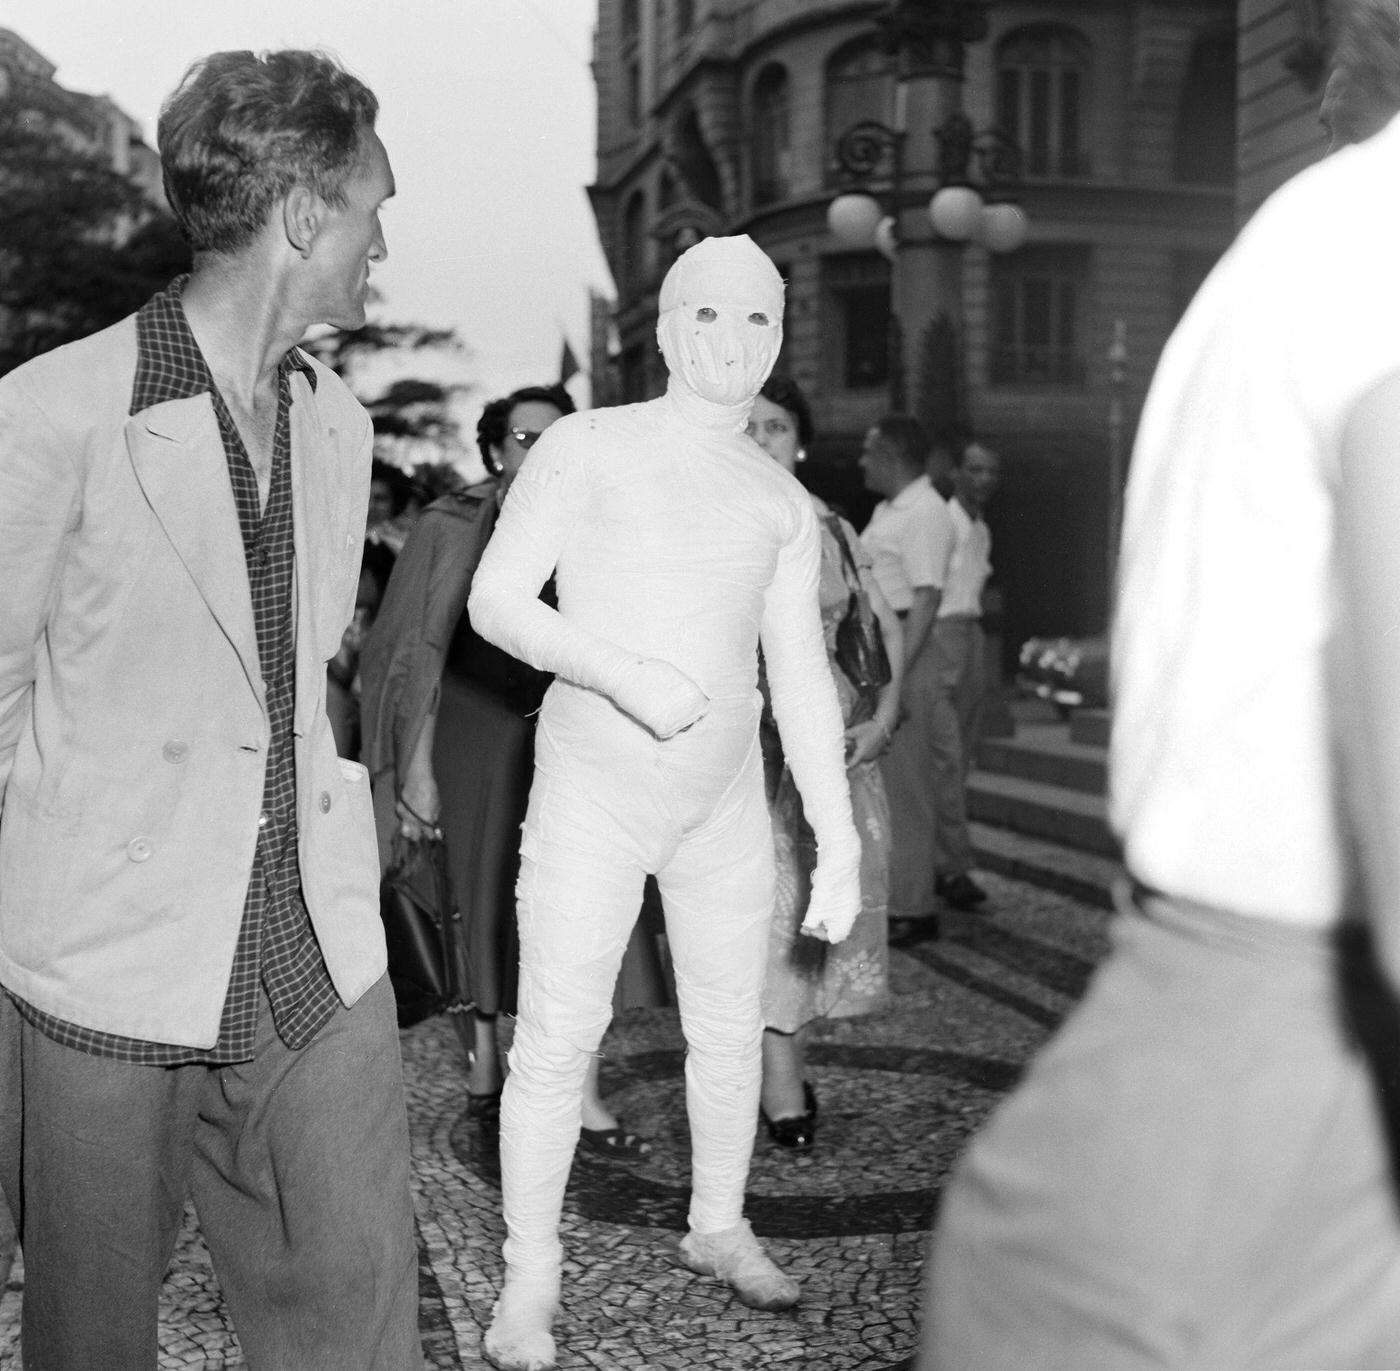 Poser in Costume on Street, Rio Carnival 1953